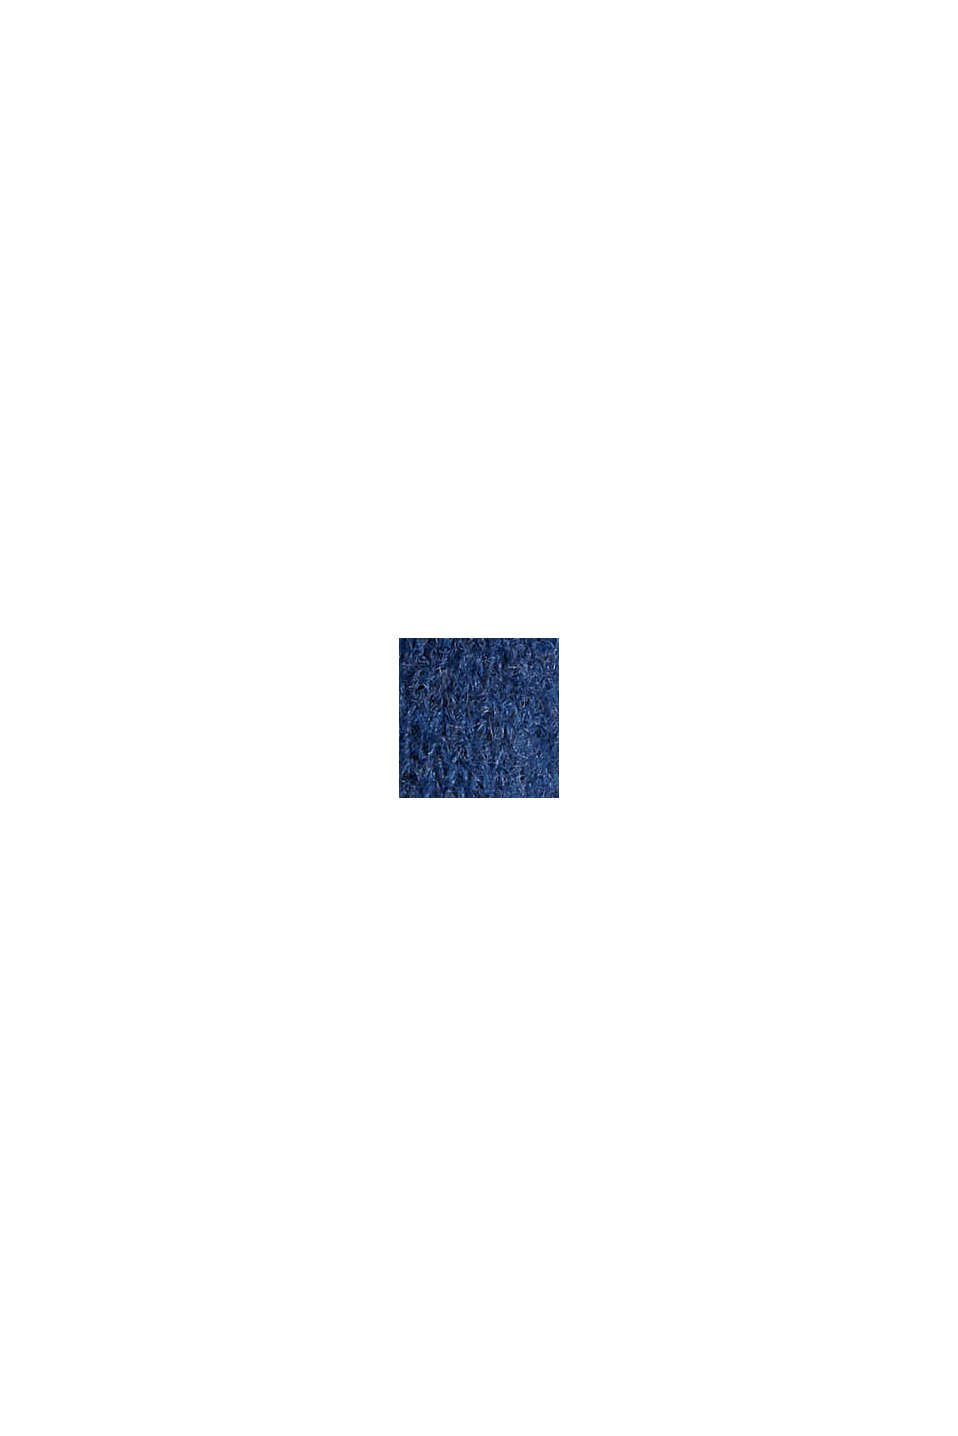 Genanvendte materialer: strikhoodie med uld, NEW DARK BLUE, swatch